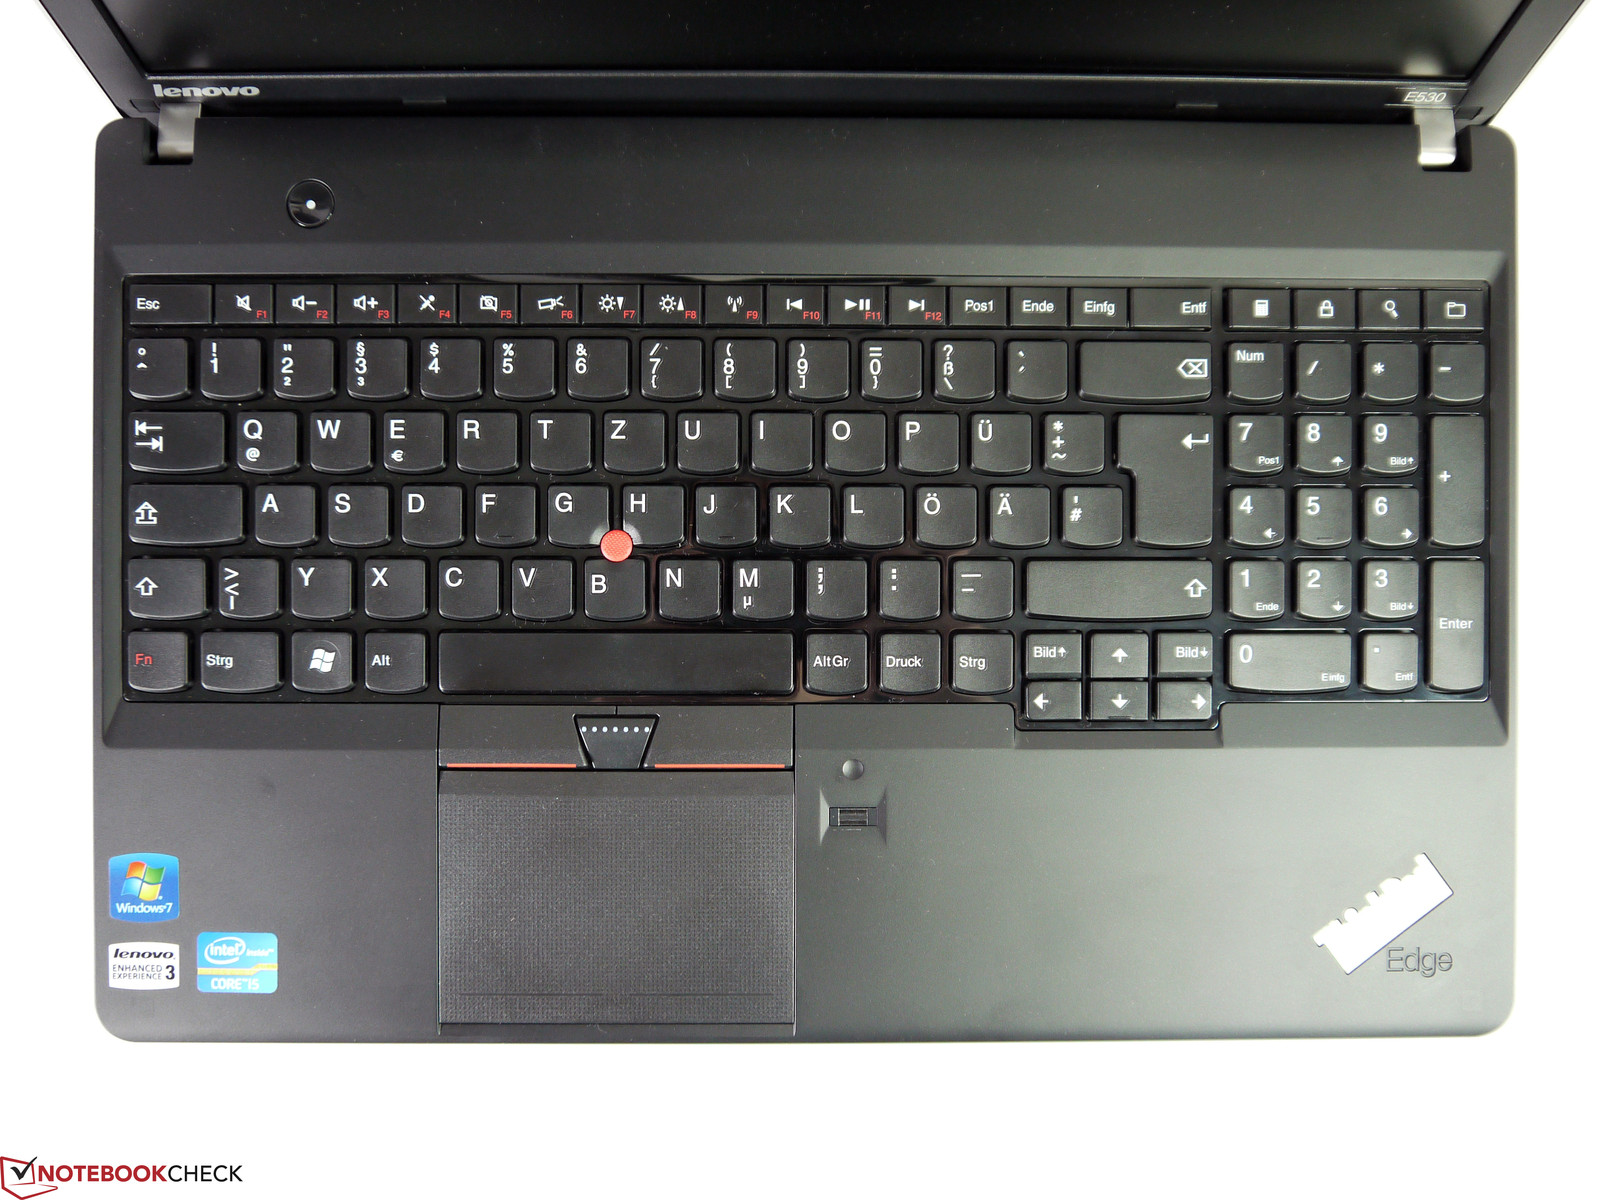 Sui meme gözlere toz atmak  Review Lenovo ThinkPad Edge E530 (NZQBQGE) Notebook - NotebookCheck.net  Reviews